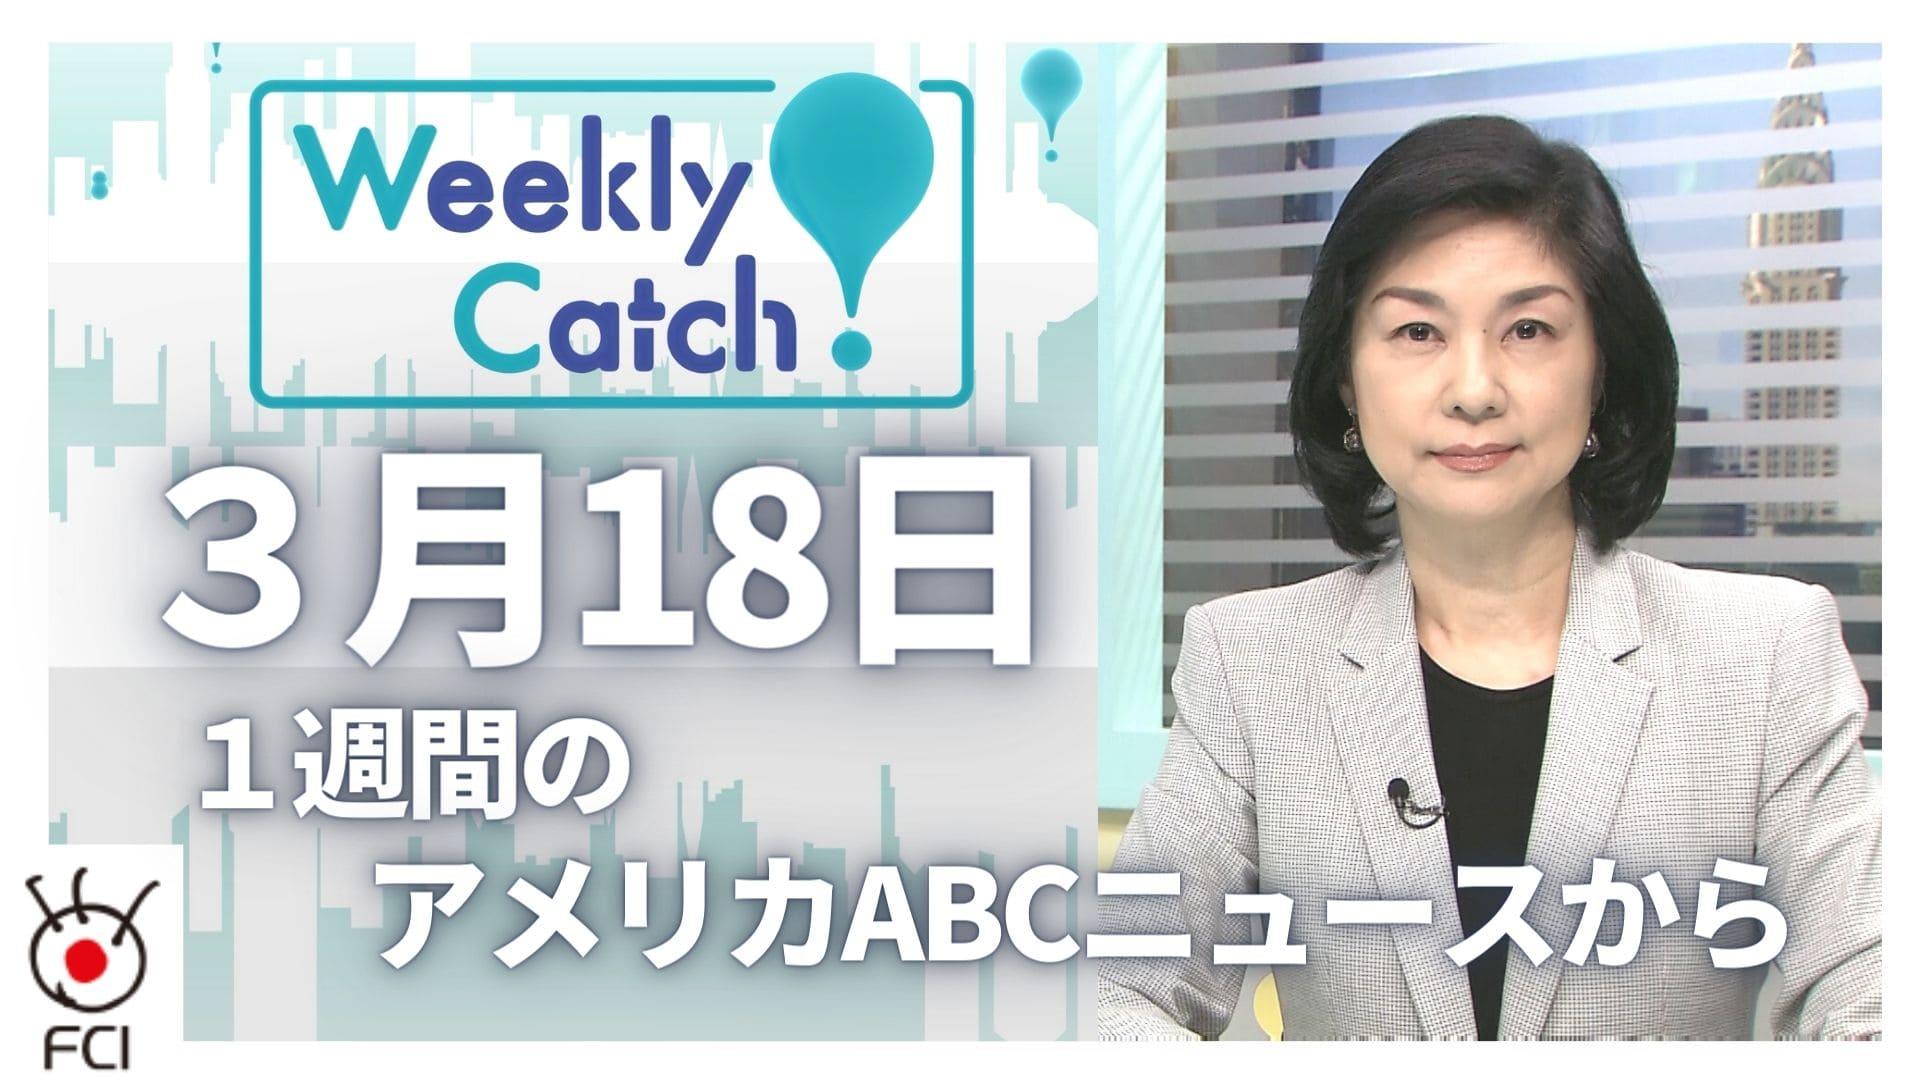 3月18 日 Weekly Catch!